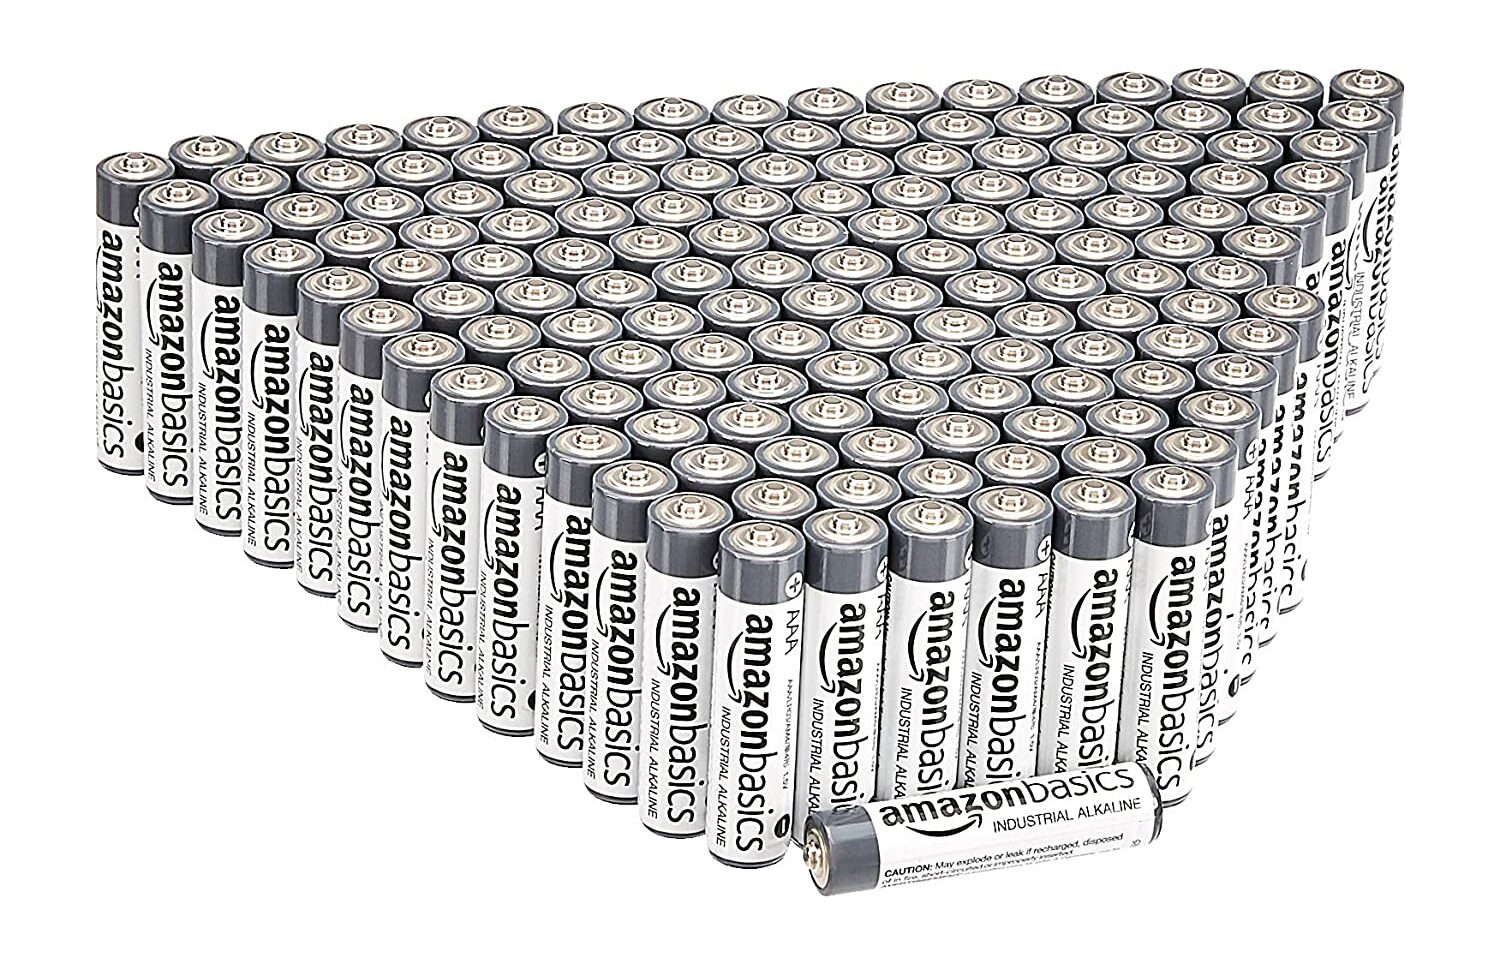 48 batterie Alcaline AA solo 9,99 euro